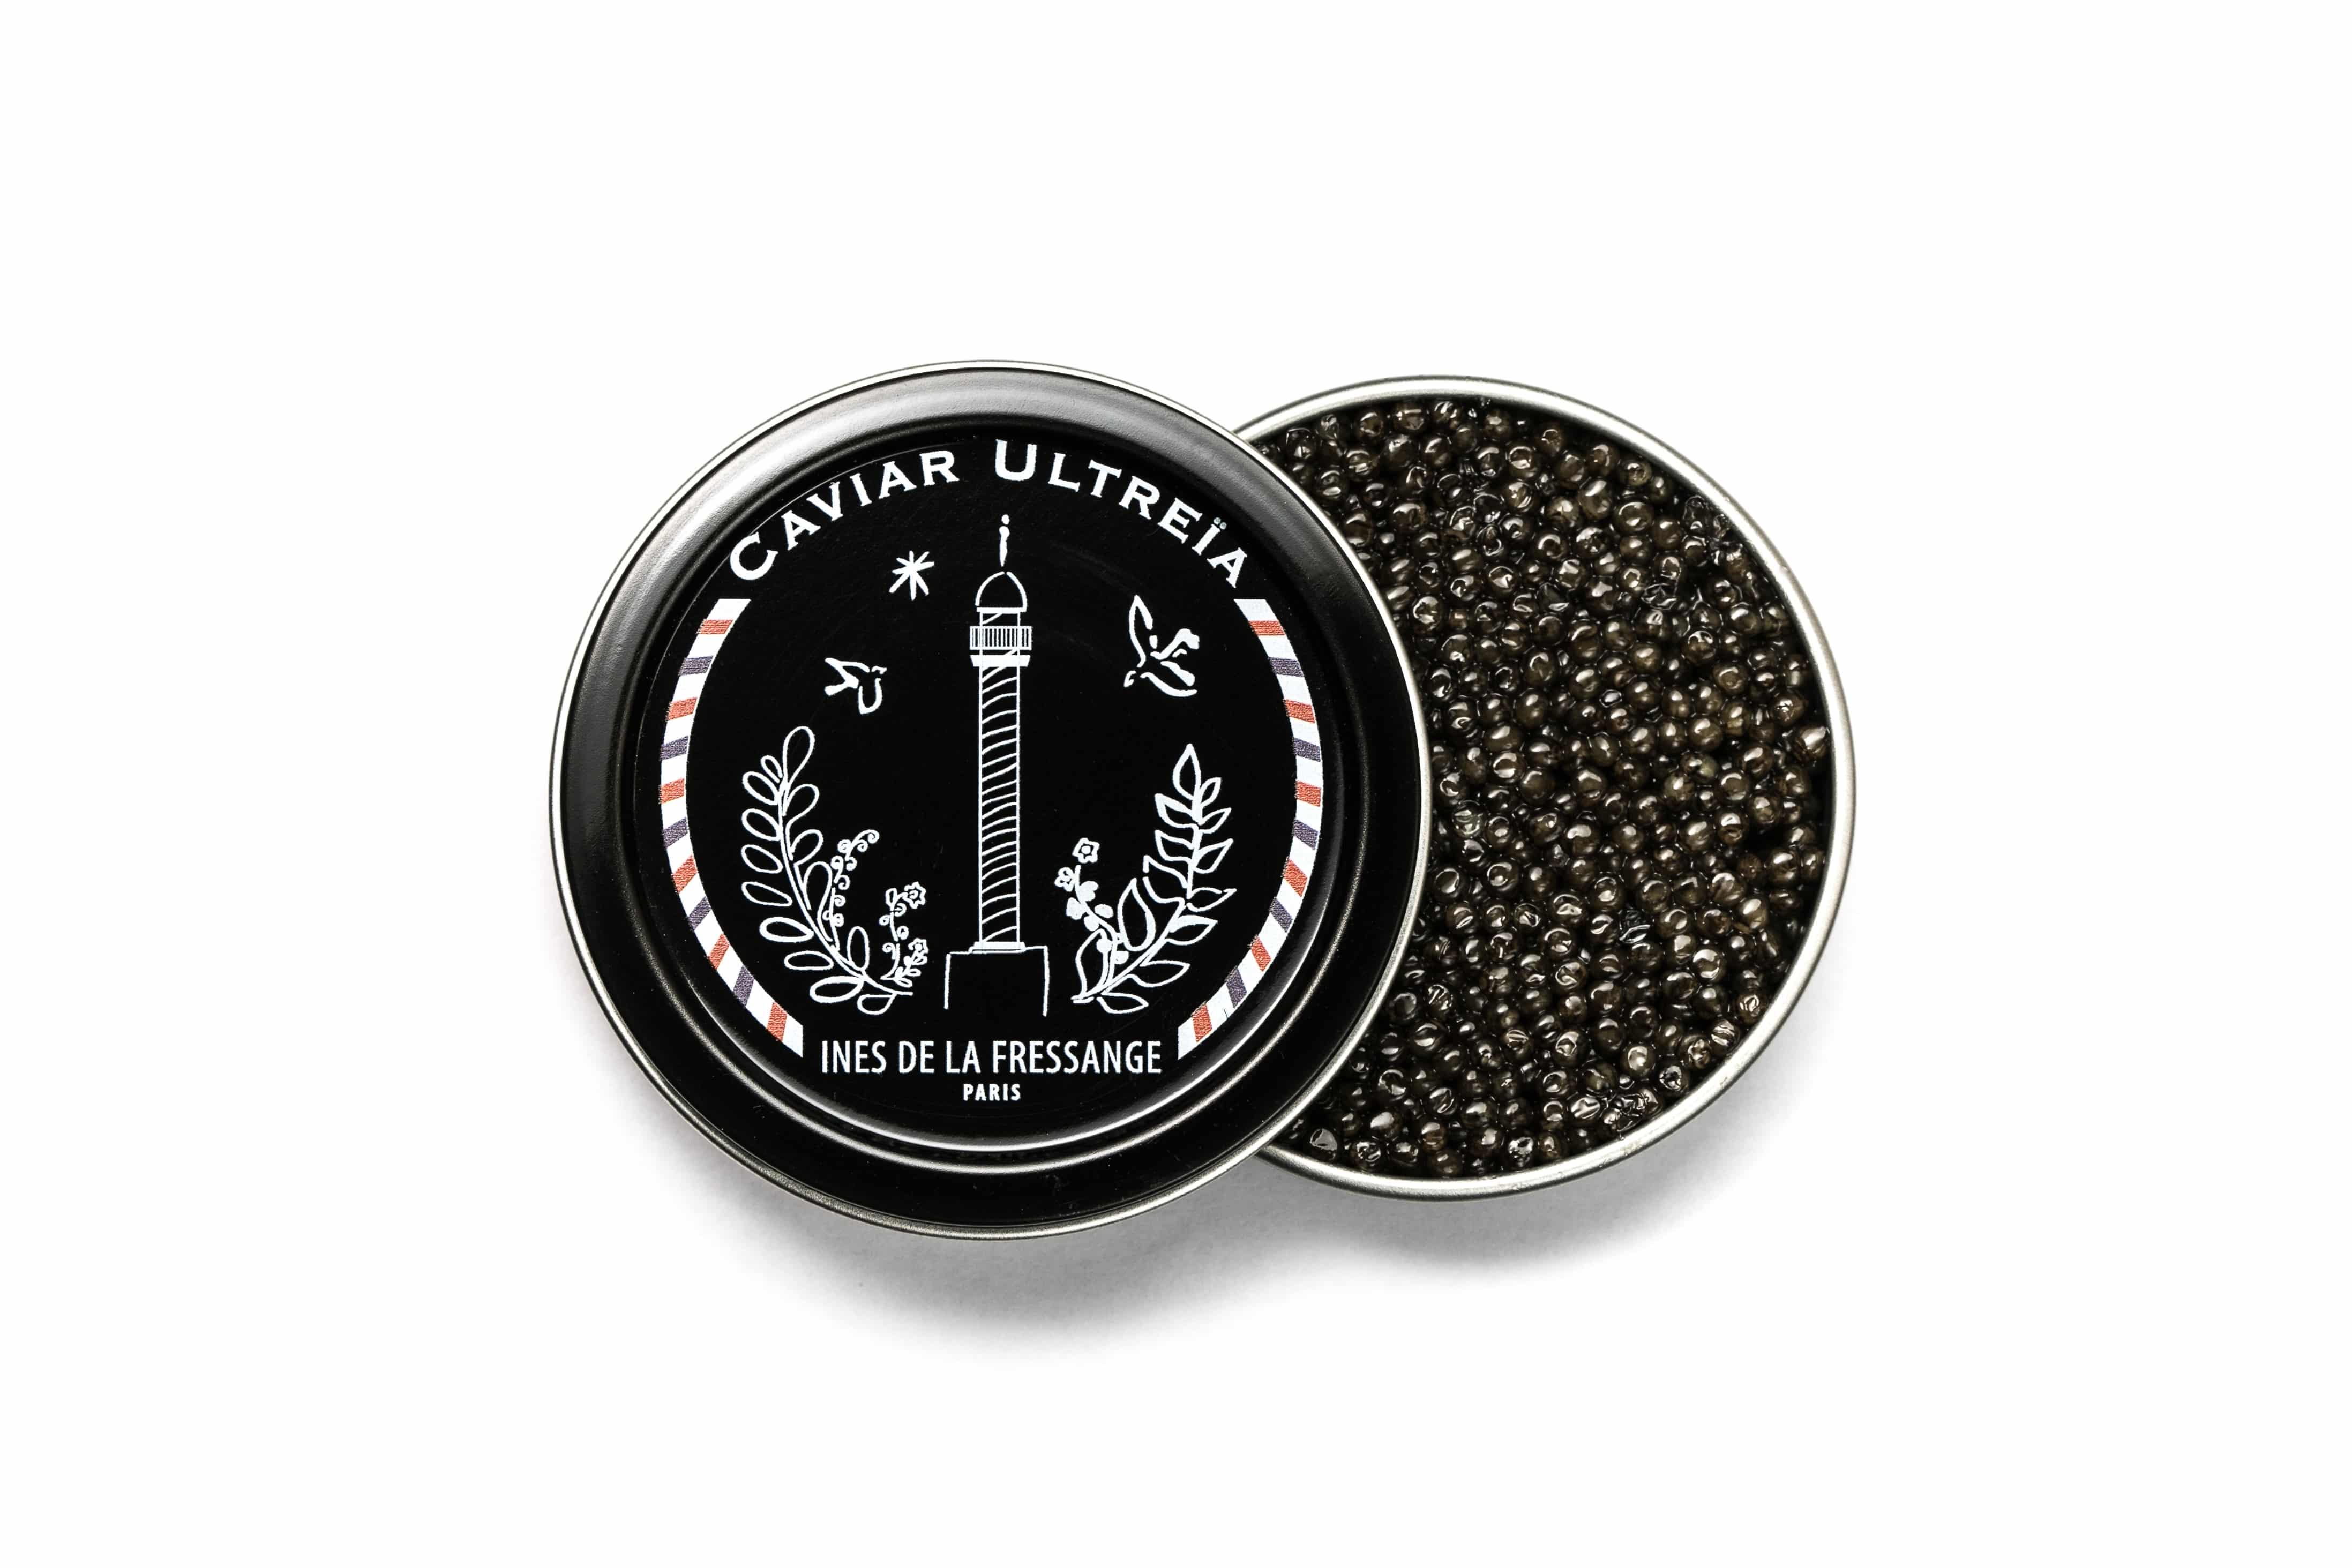 #inesdelaFressange #caviar #Ultreia #placevendome #noel2016 #gastronomie